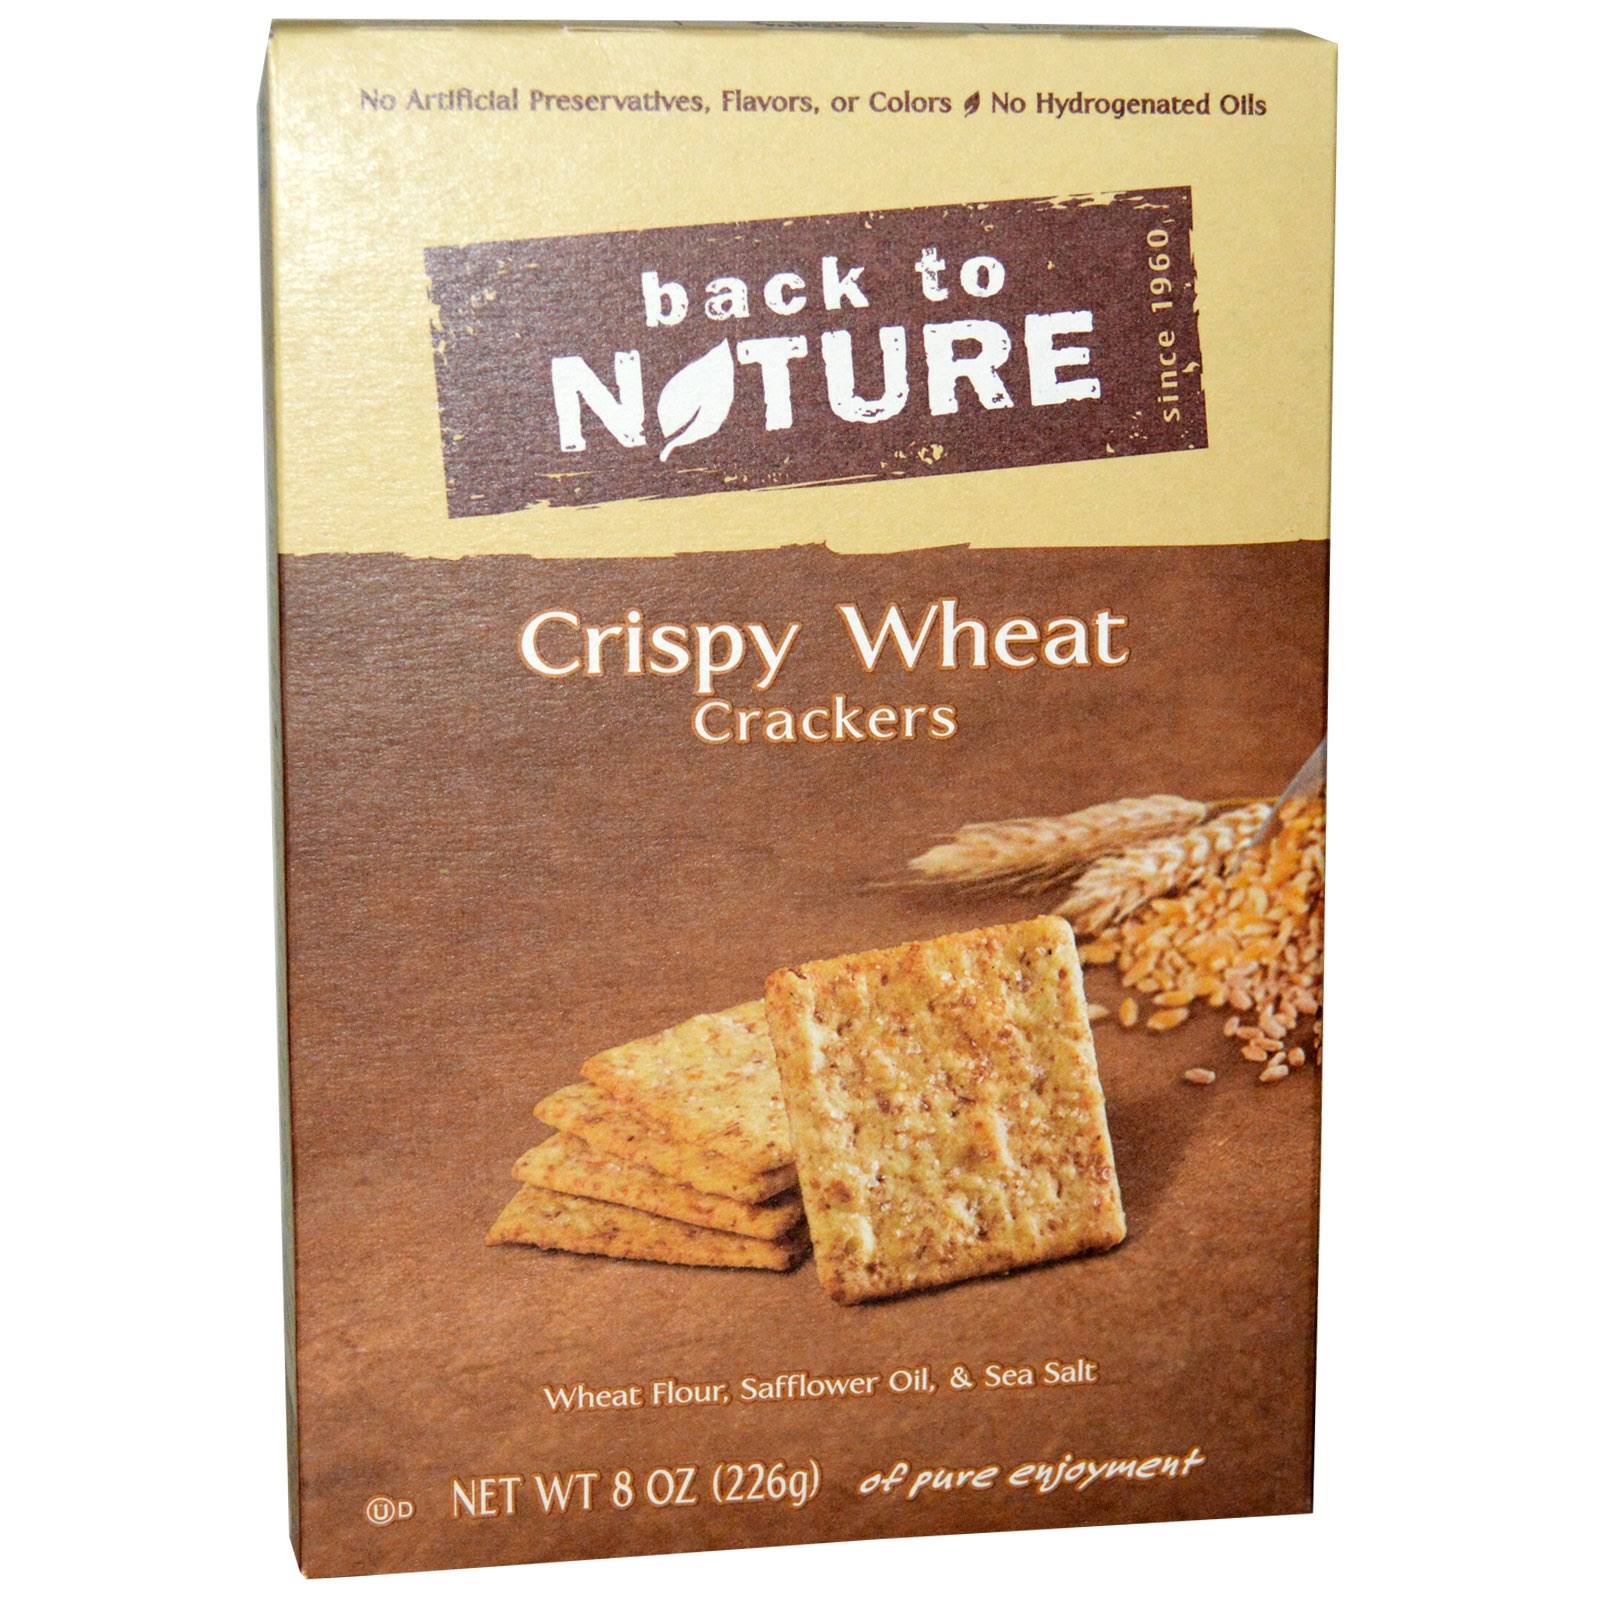 Back to Nature Non Gmo Crackers Crispy Wheat Crackers - 8oz